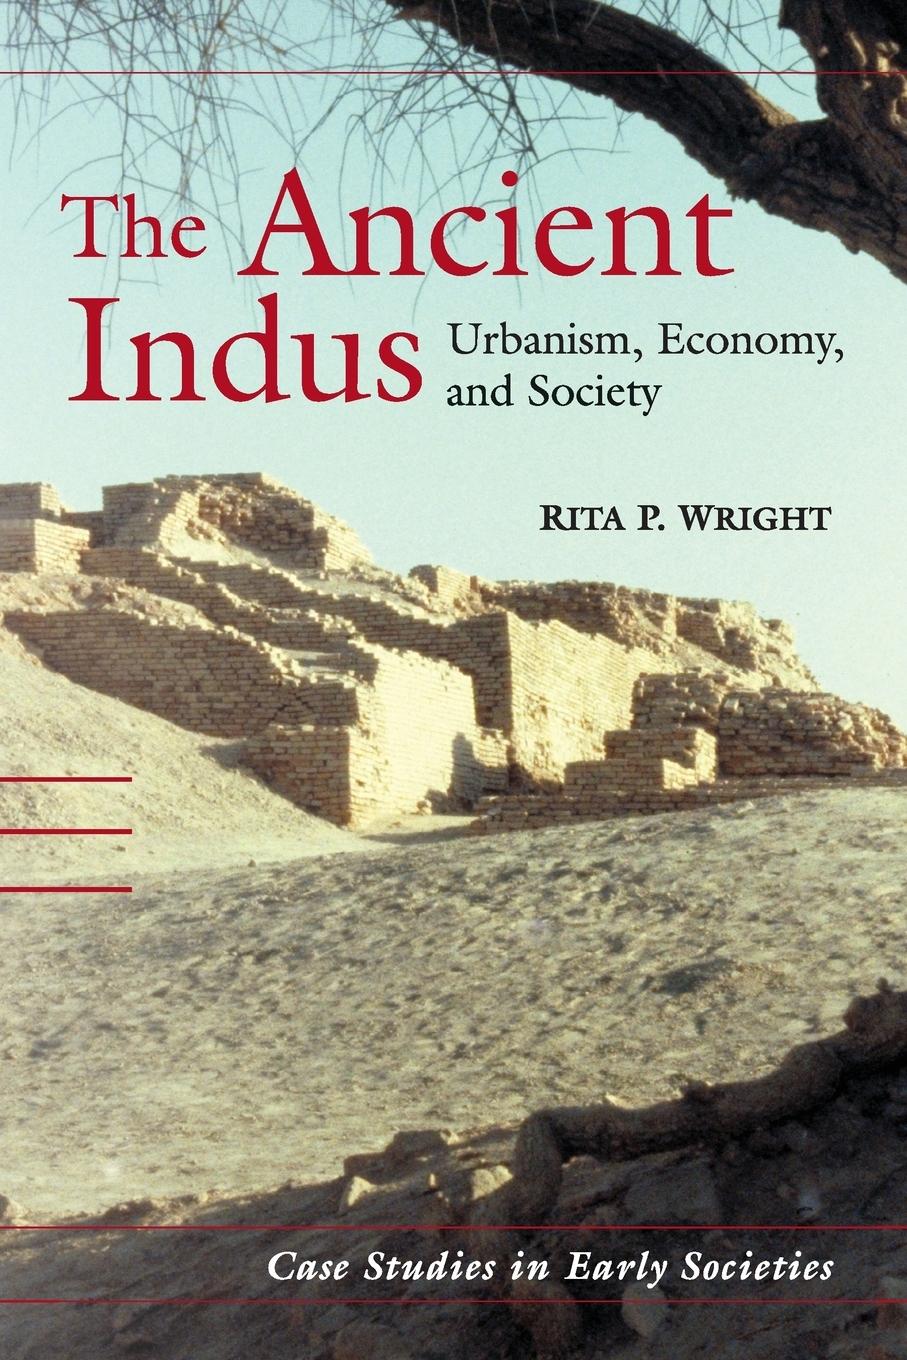 The Ancient Indus / Rita P. Wright / Taschenbuch / Paperback / Kartoniert / Broschiert / Englisch / 2015 / Cambridge University Press / EAN 9780521576529 - Wright, Rita P.